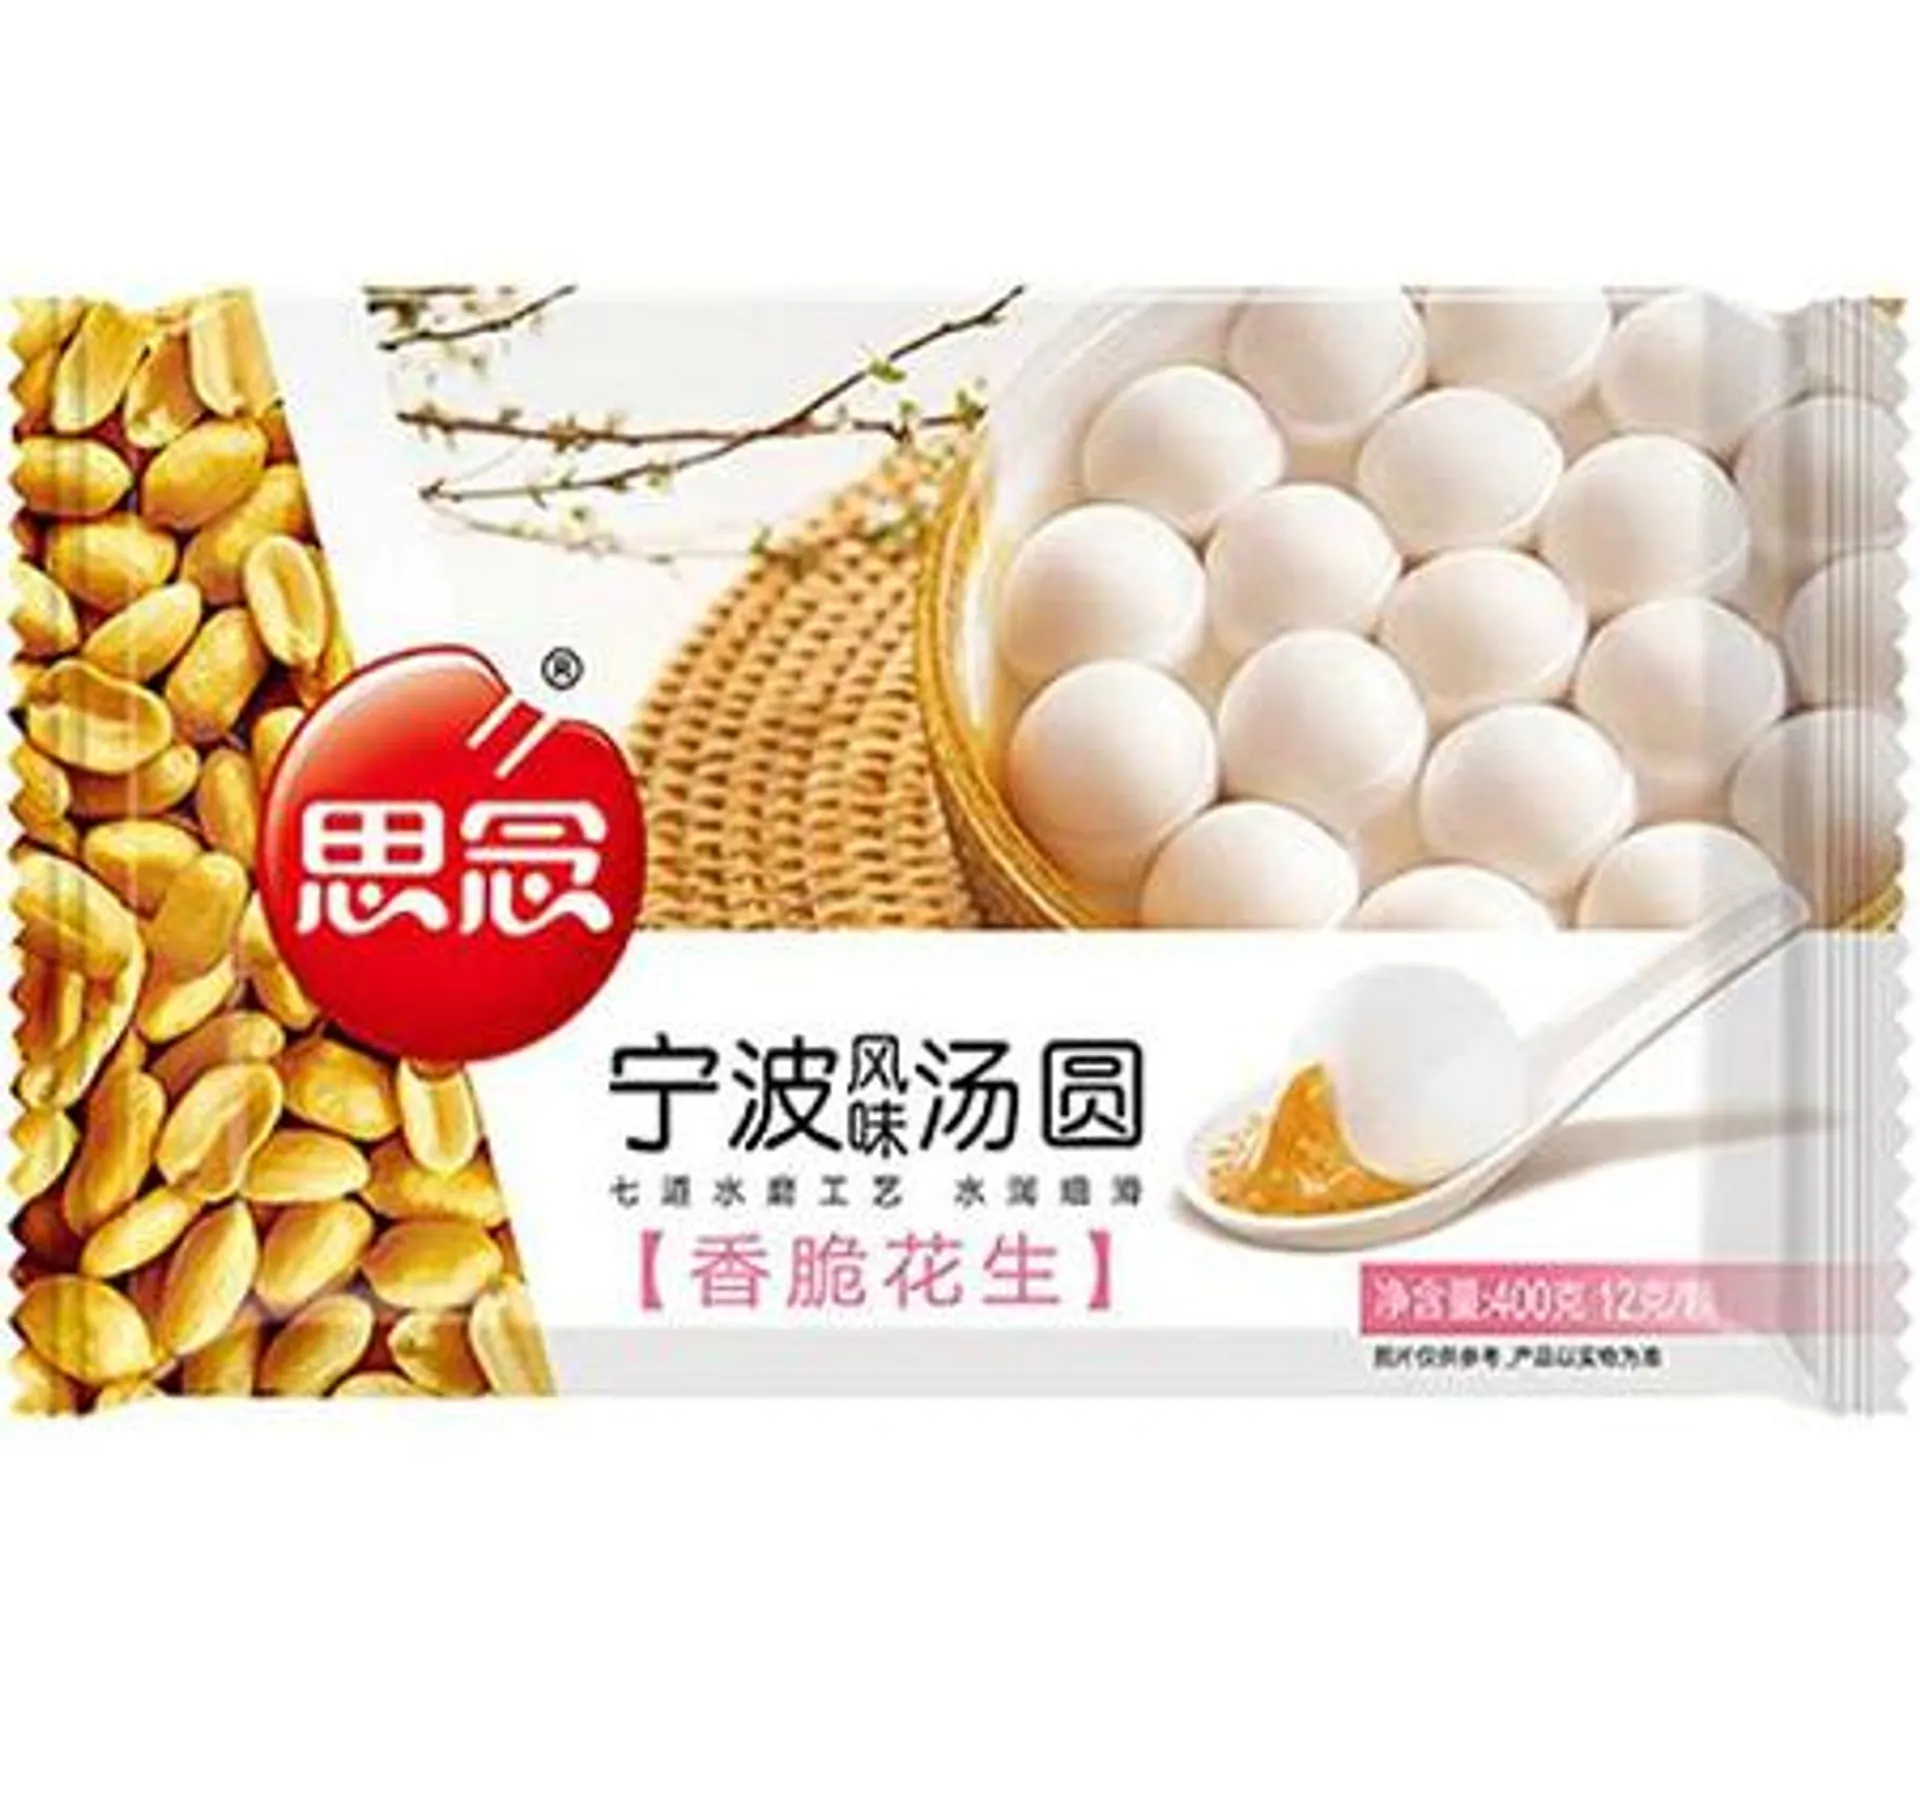 Synear rice ball (peanut) - 400g